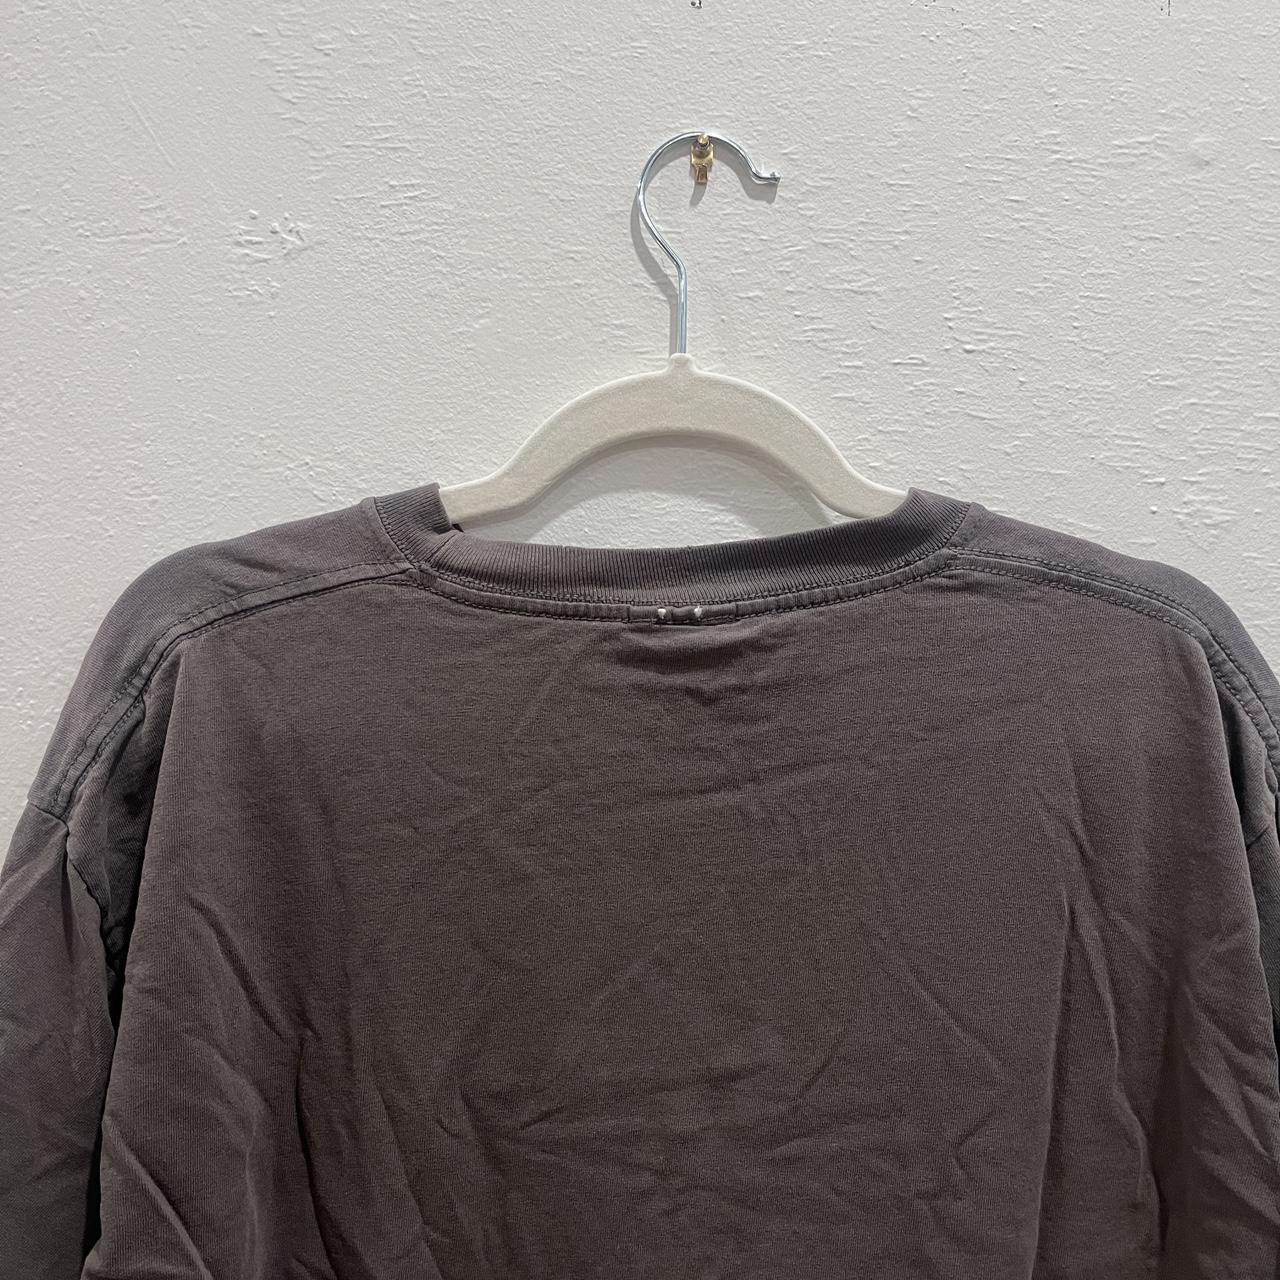 Men's Grey and Brown T-shirt (4)